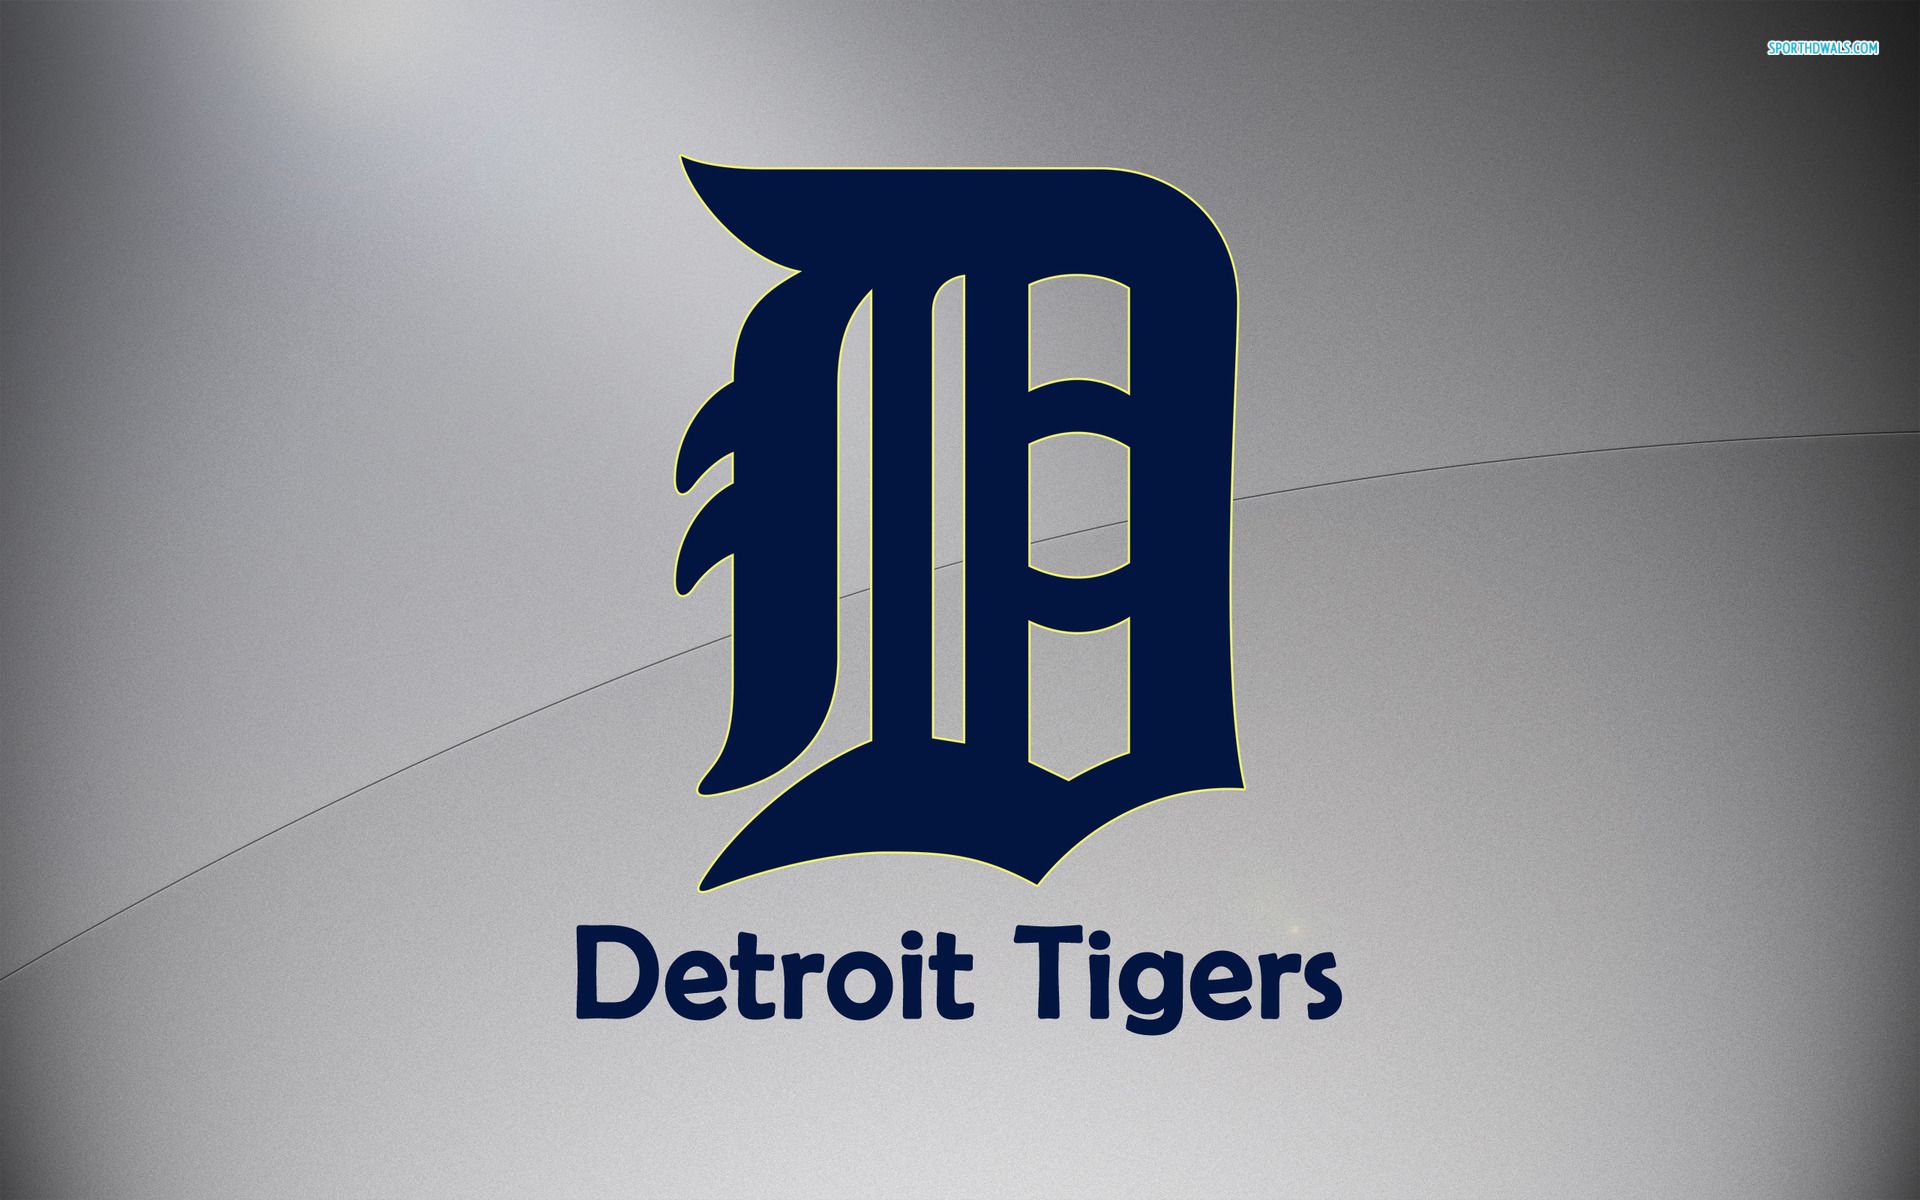 Detroit Tigers Wallpapers 2015 Schedule - Wallpaper Cave